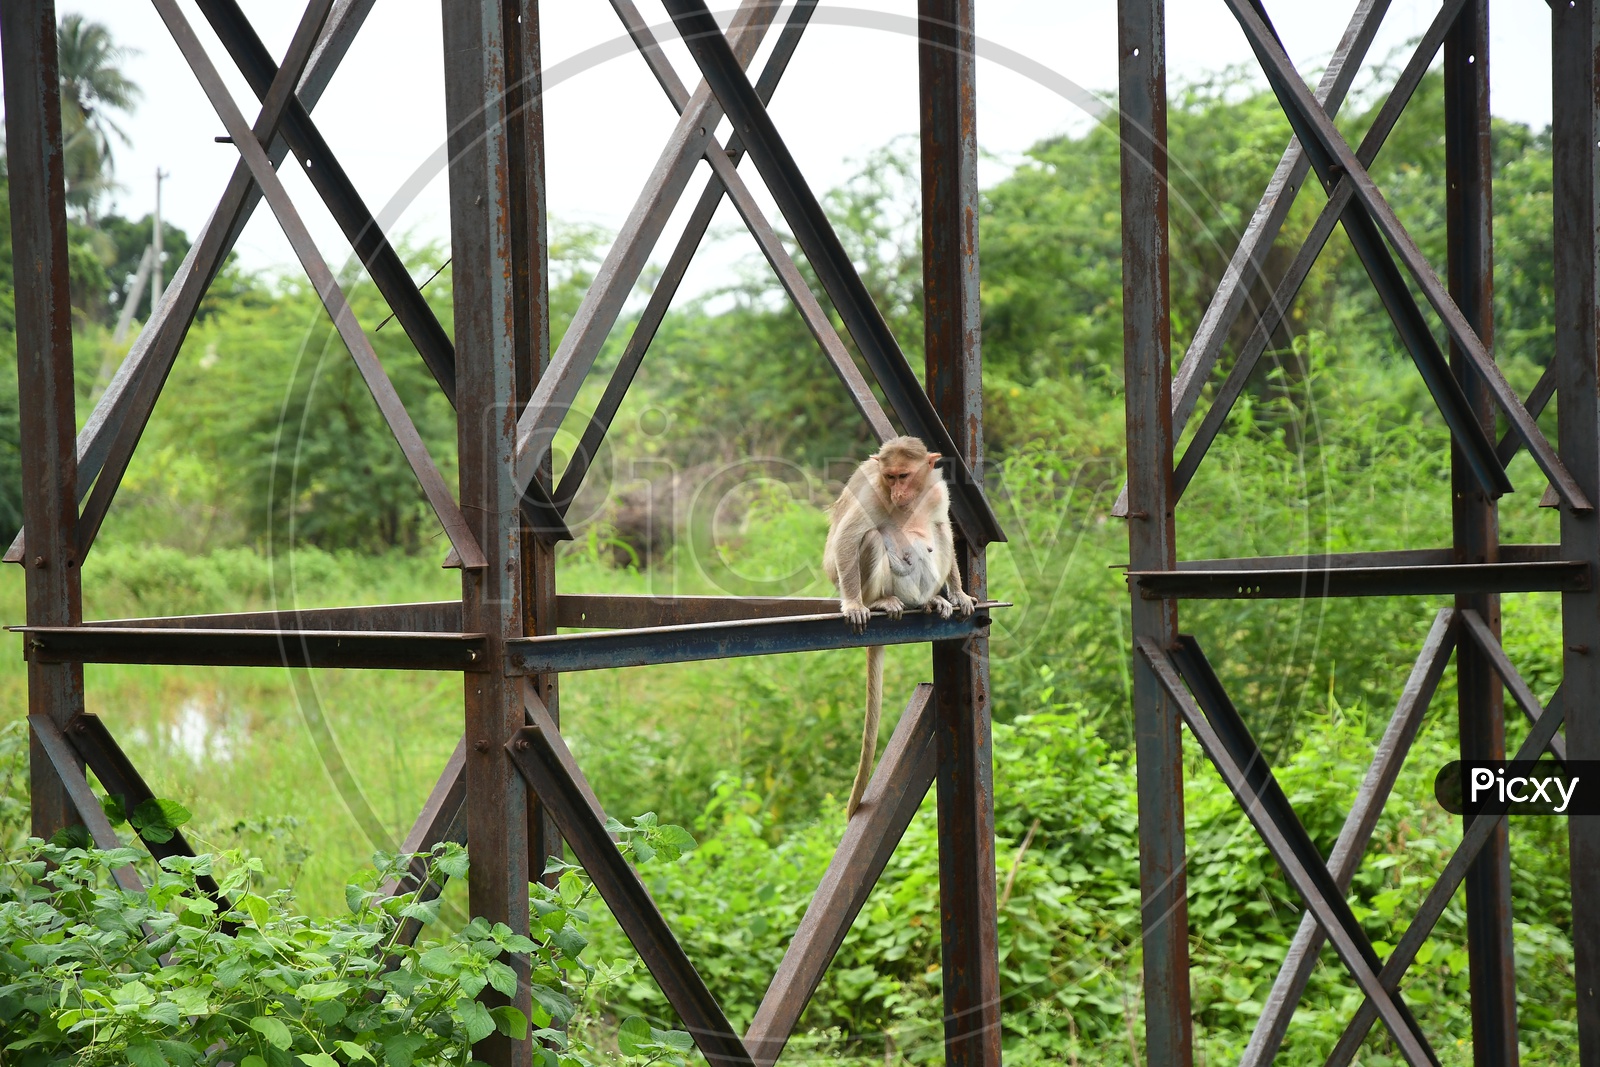 A Female Monkey on the Iron bar